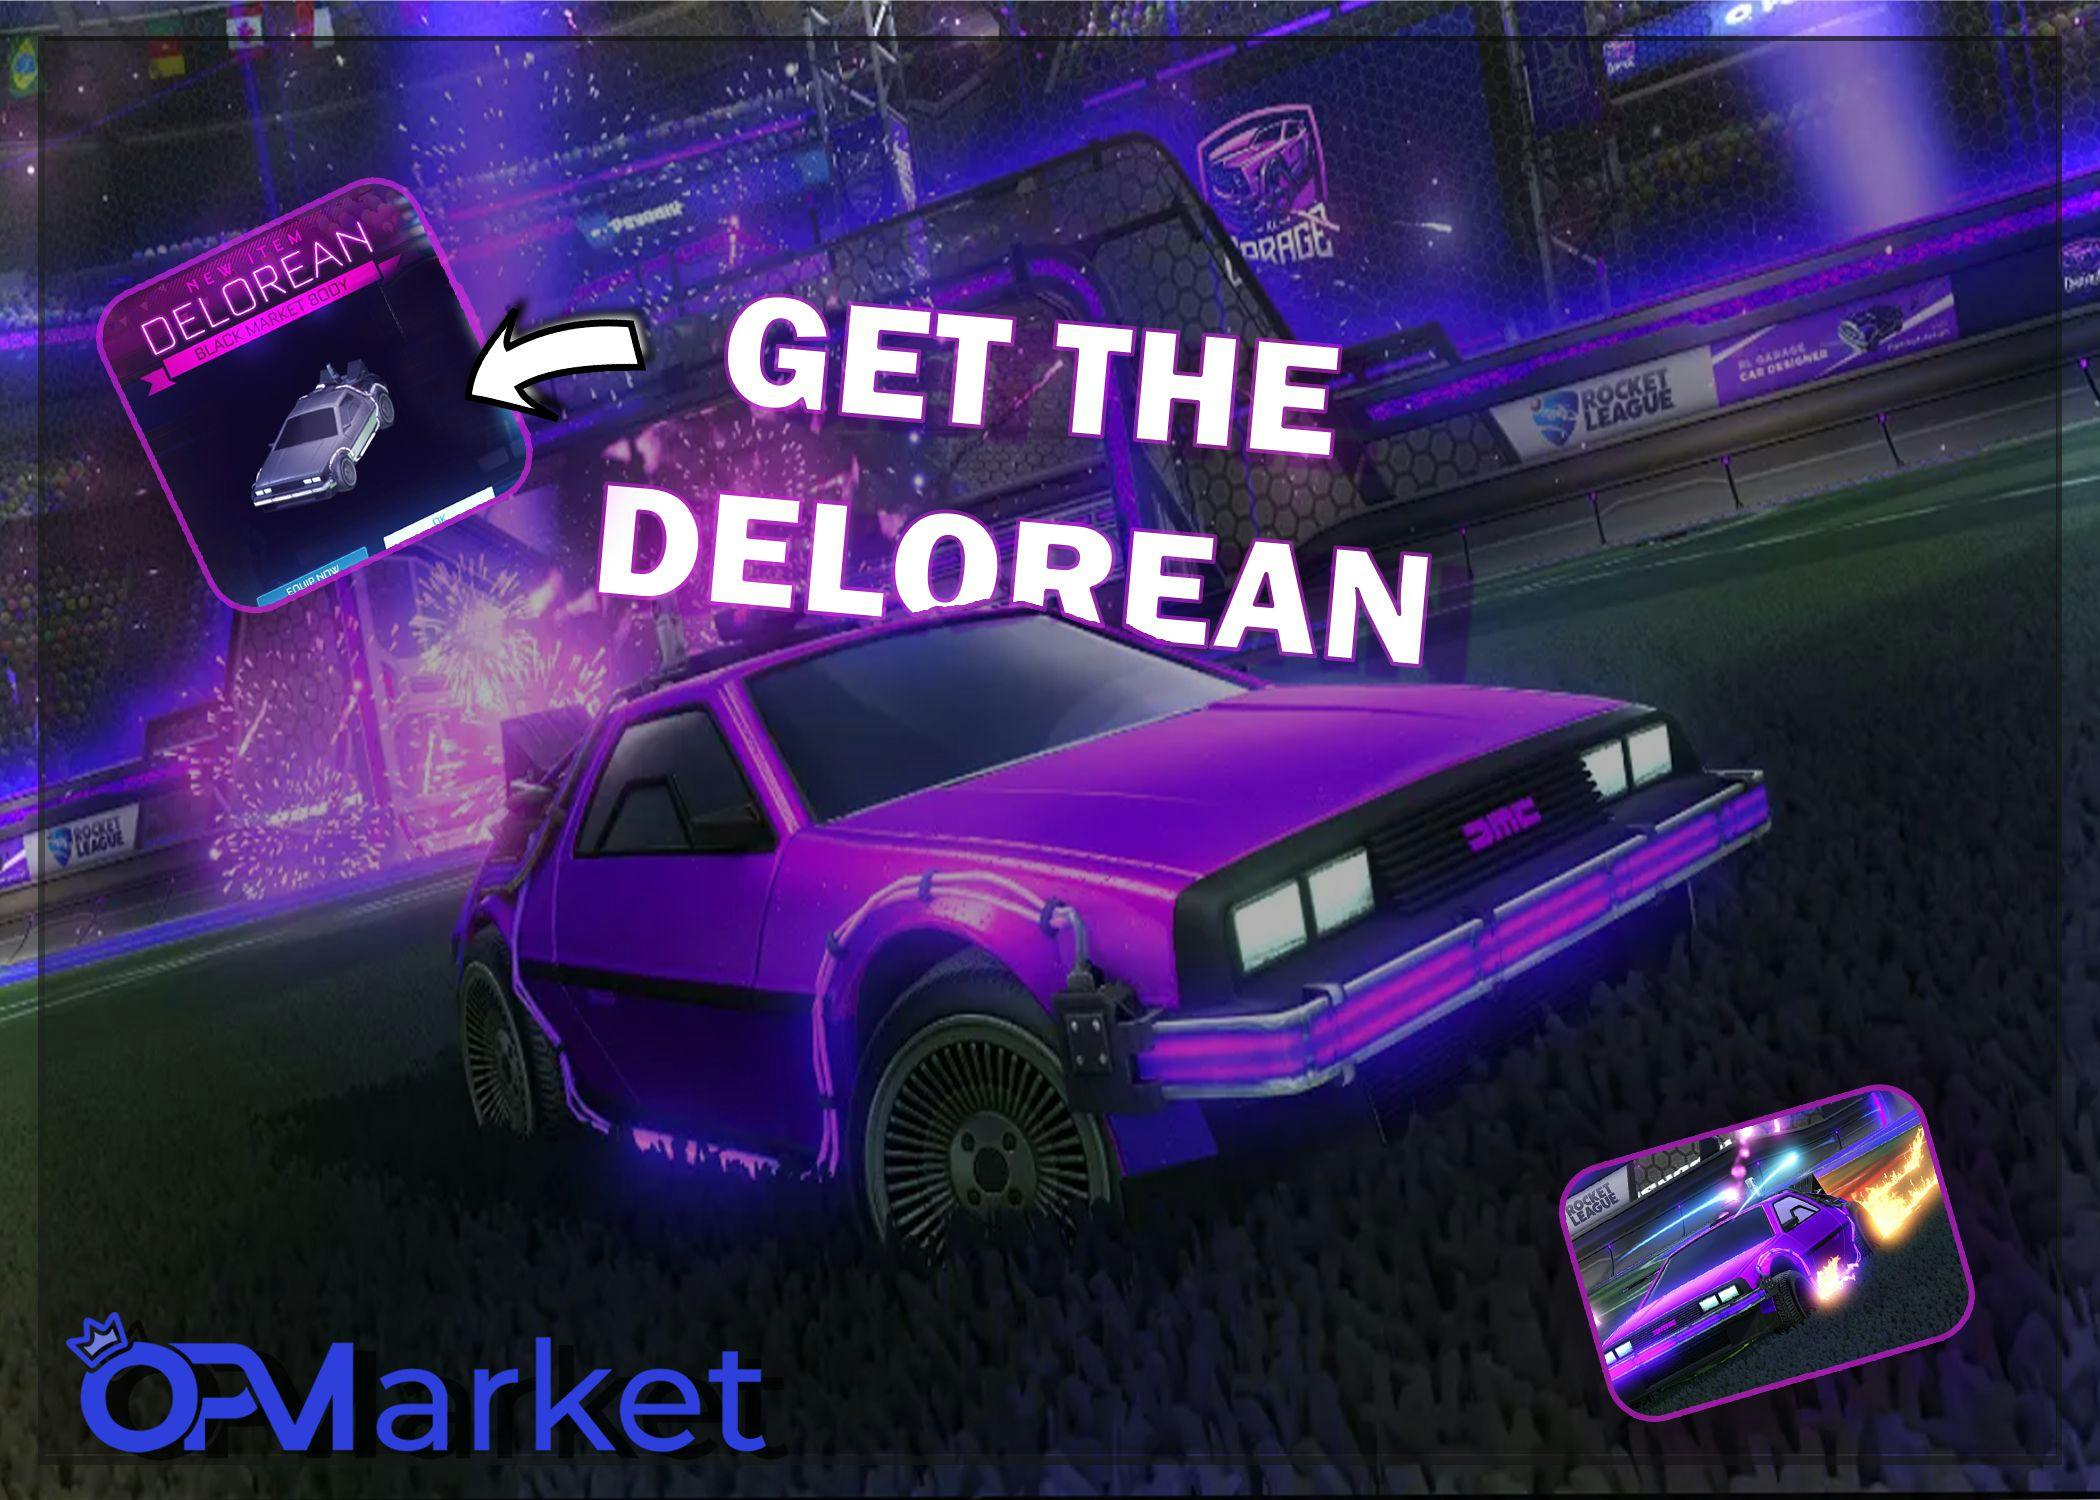 Rocket League Delorean: Can You Still Get the Delorean in Rocket League?